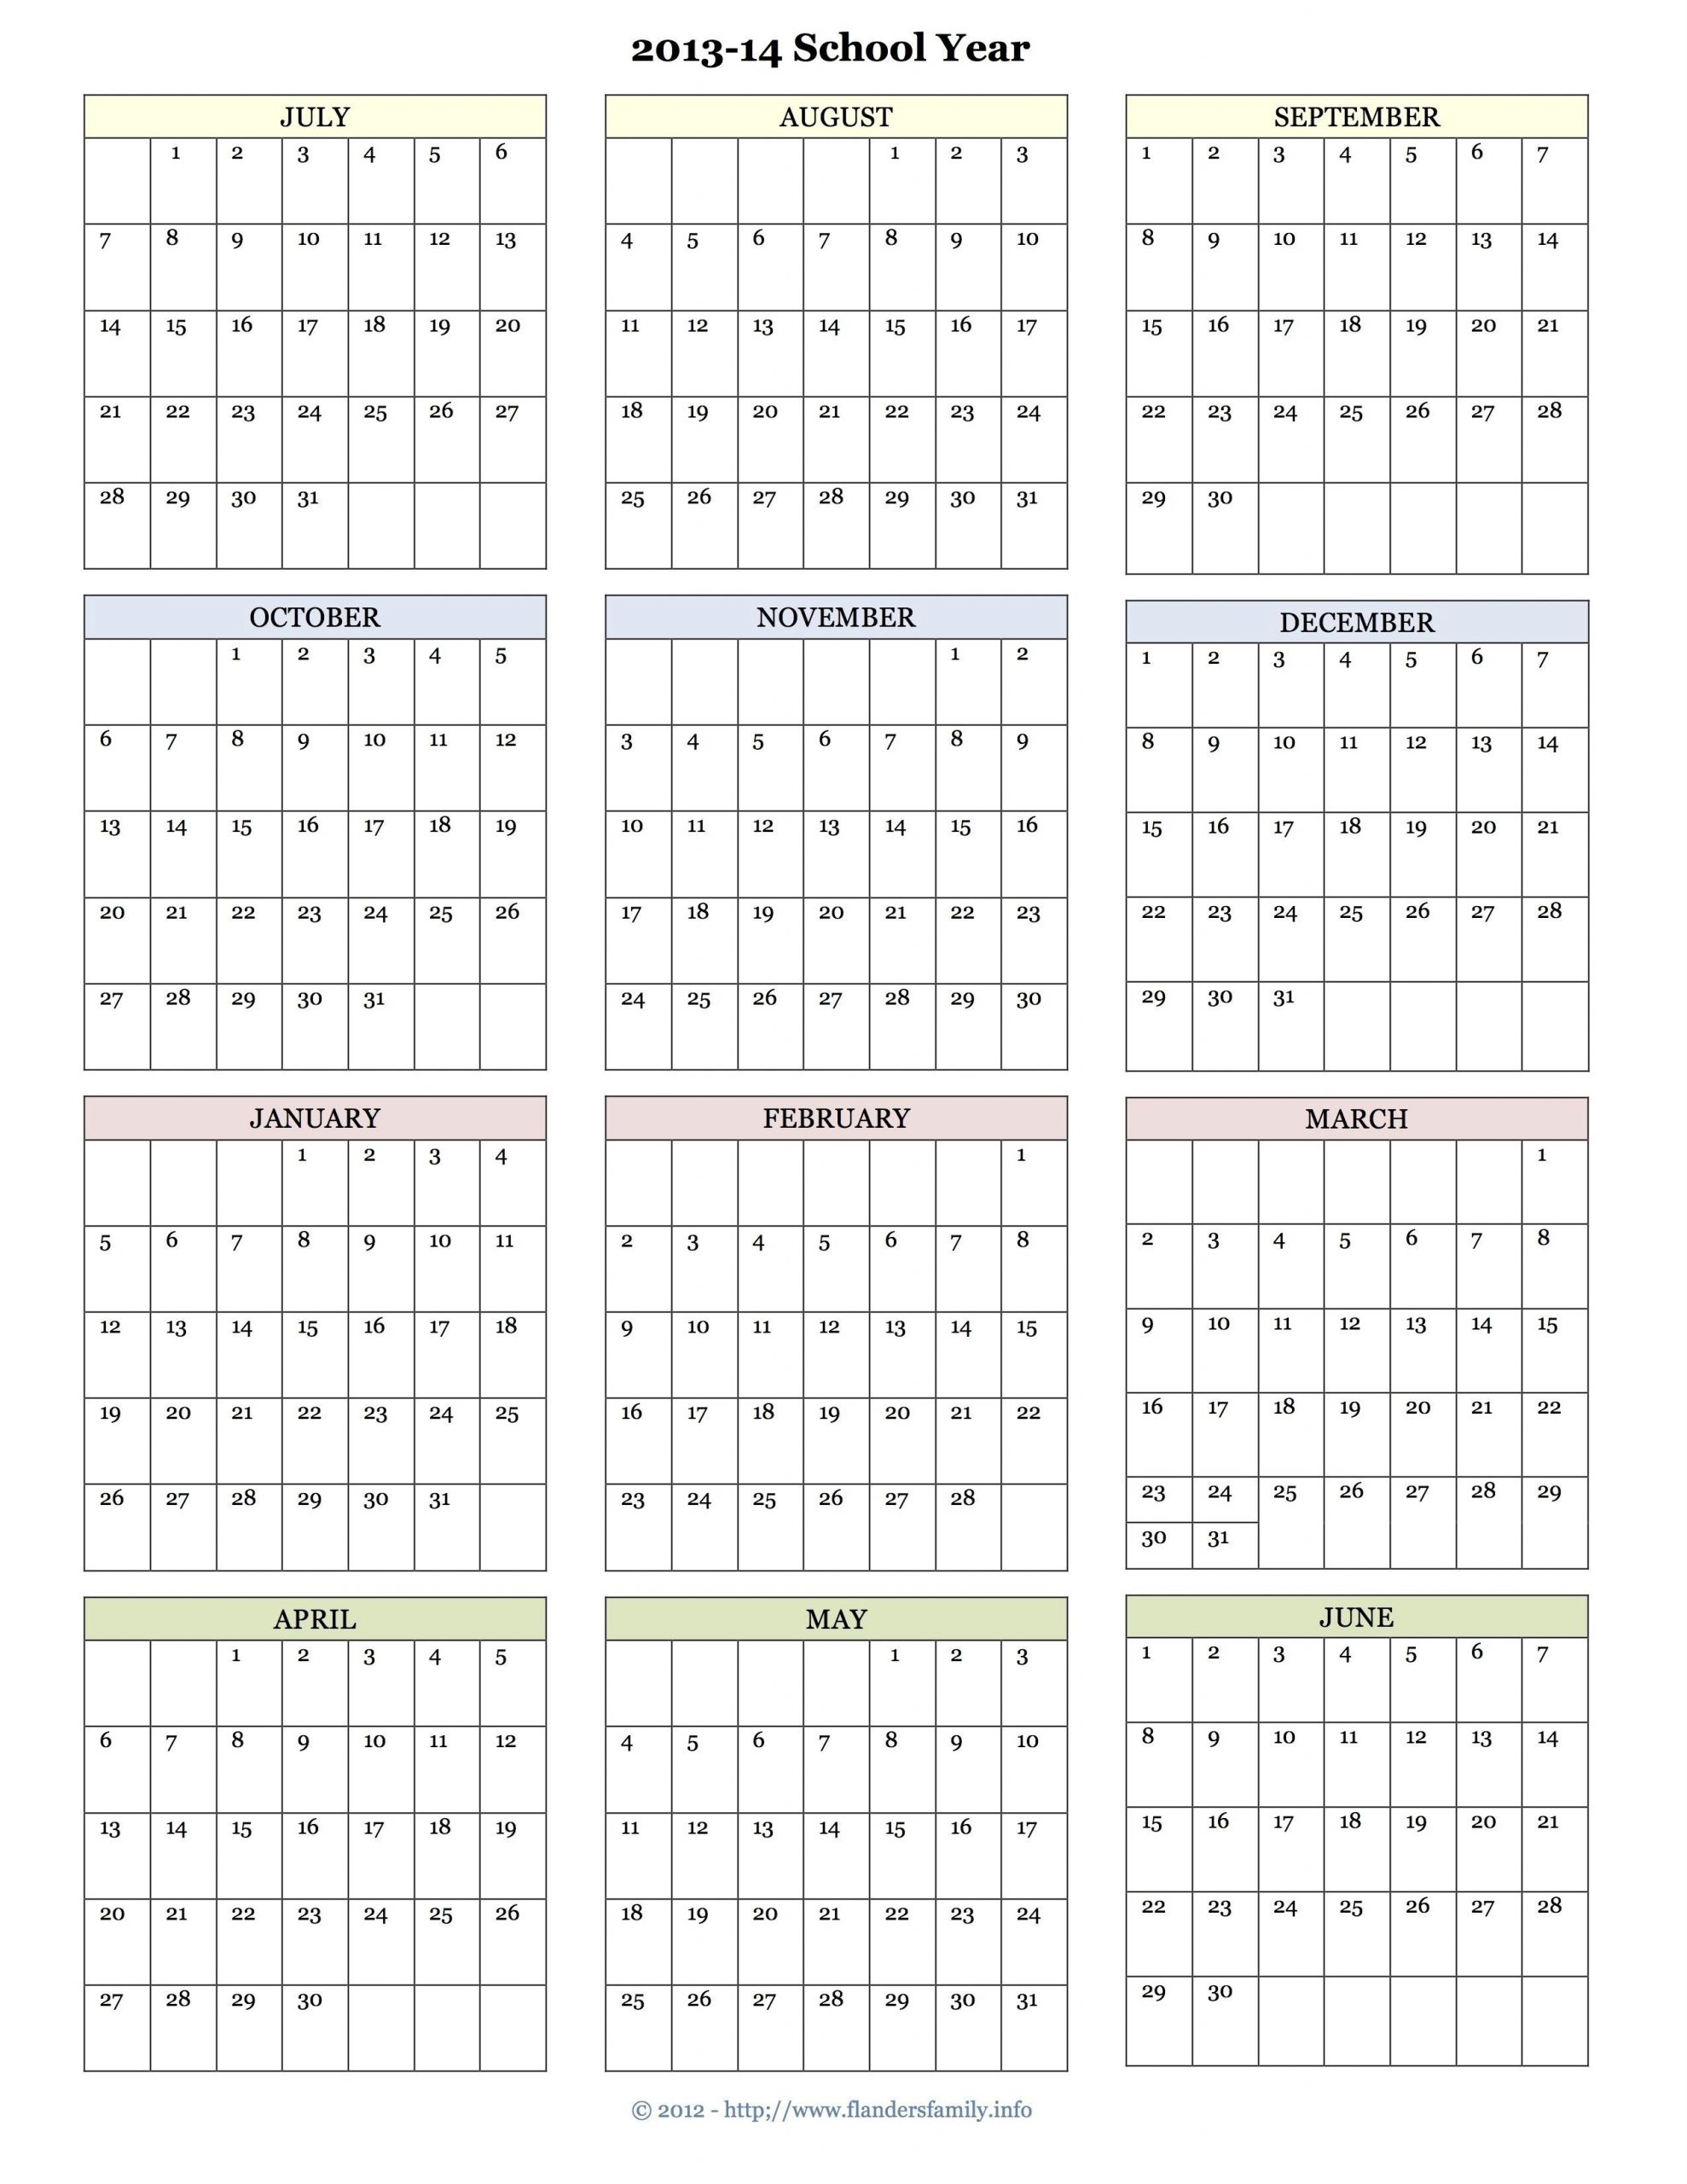 Depo Shot Calendar 2019 Depo Provera Injection Calendar 2018  Depo-Provera 14 Week Schedule